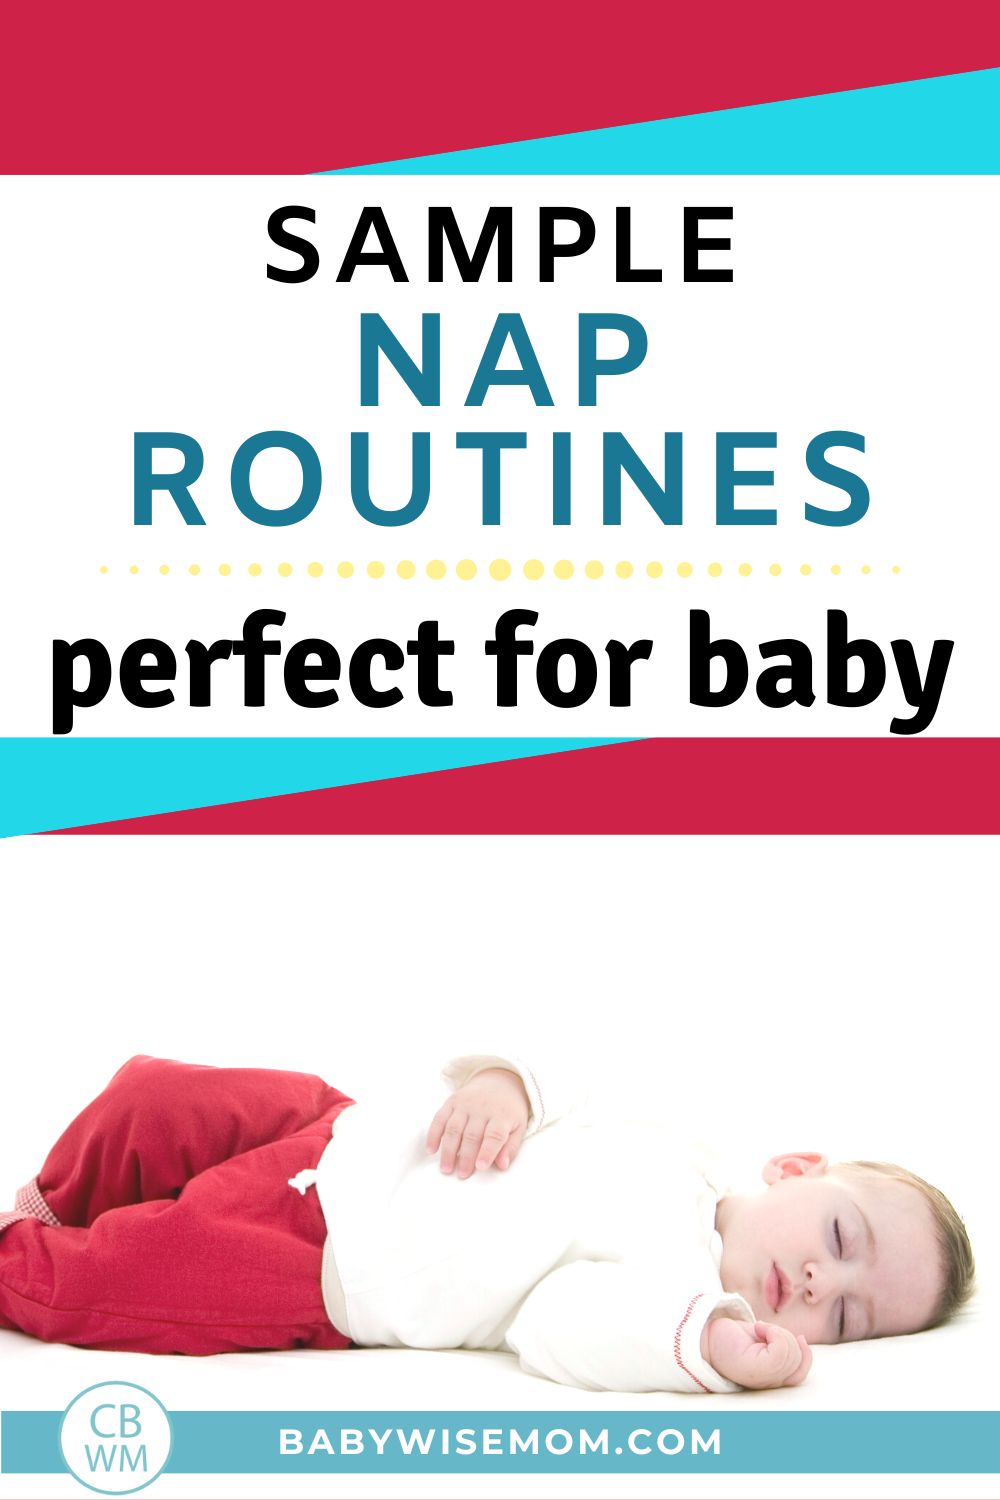 Sample nap routines pinnable image